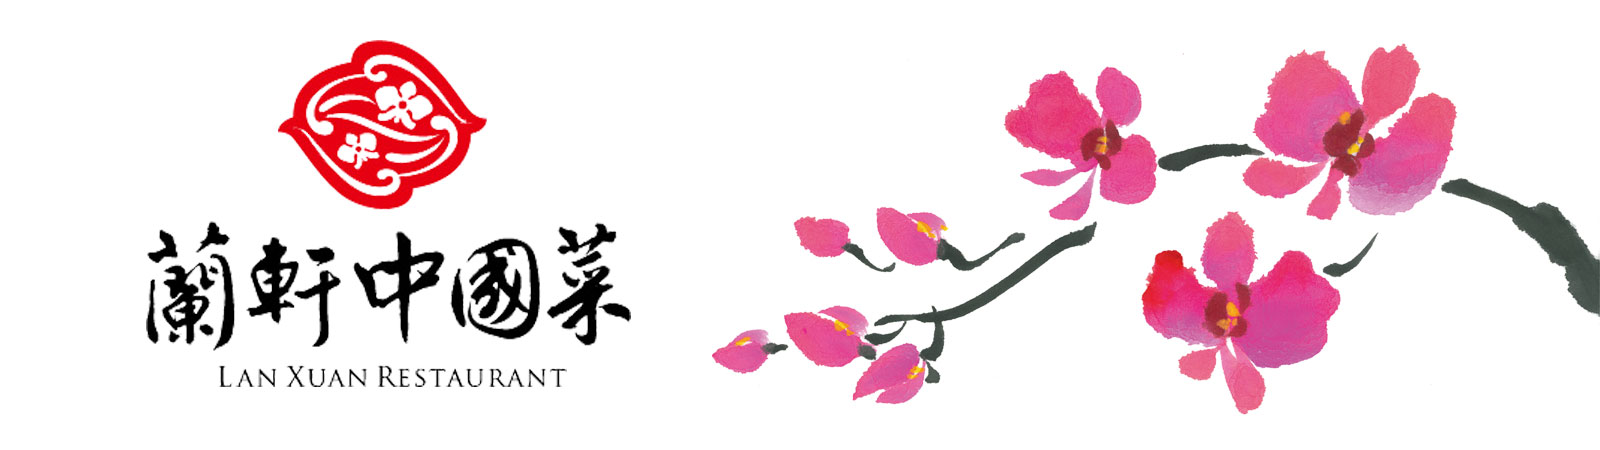 蘭軒中國菜banner01